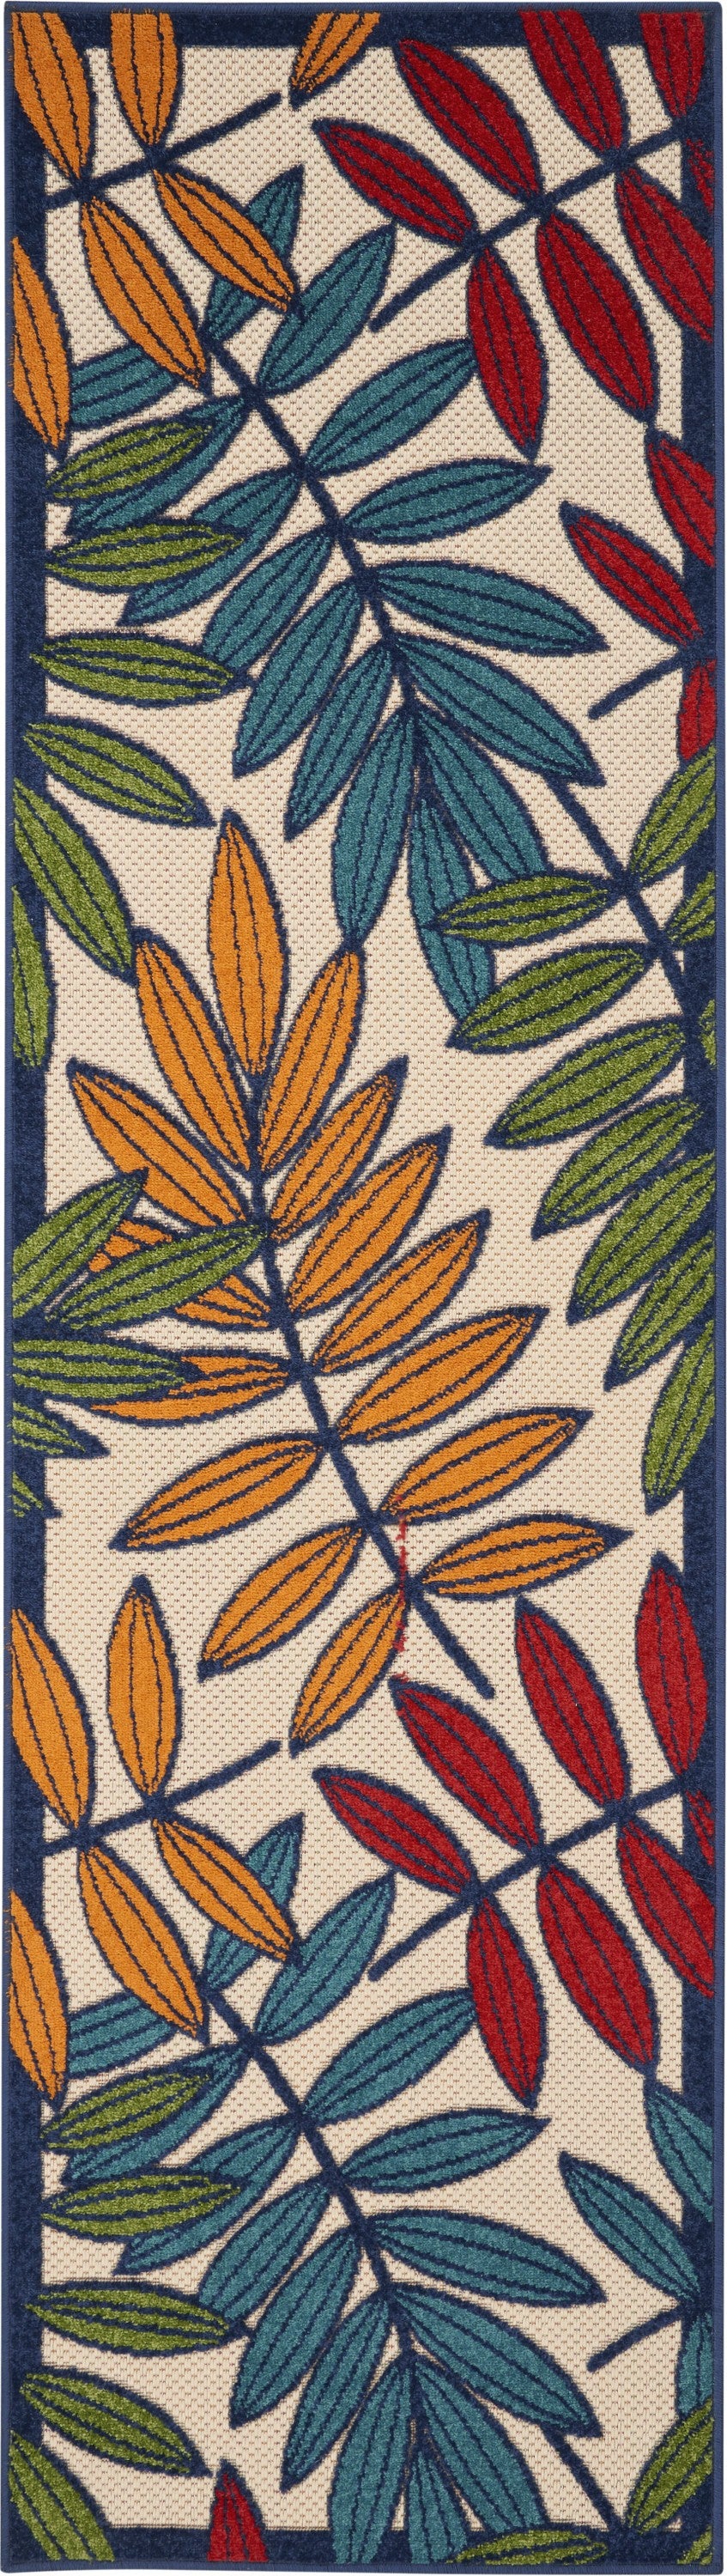 2’x 8’ Multicolored Leaves Indoor Outdoor Runner Rug